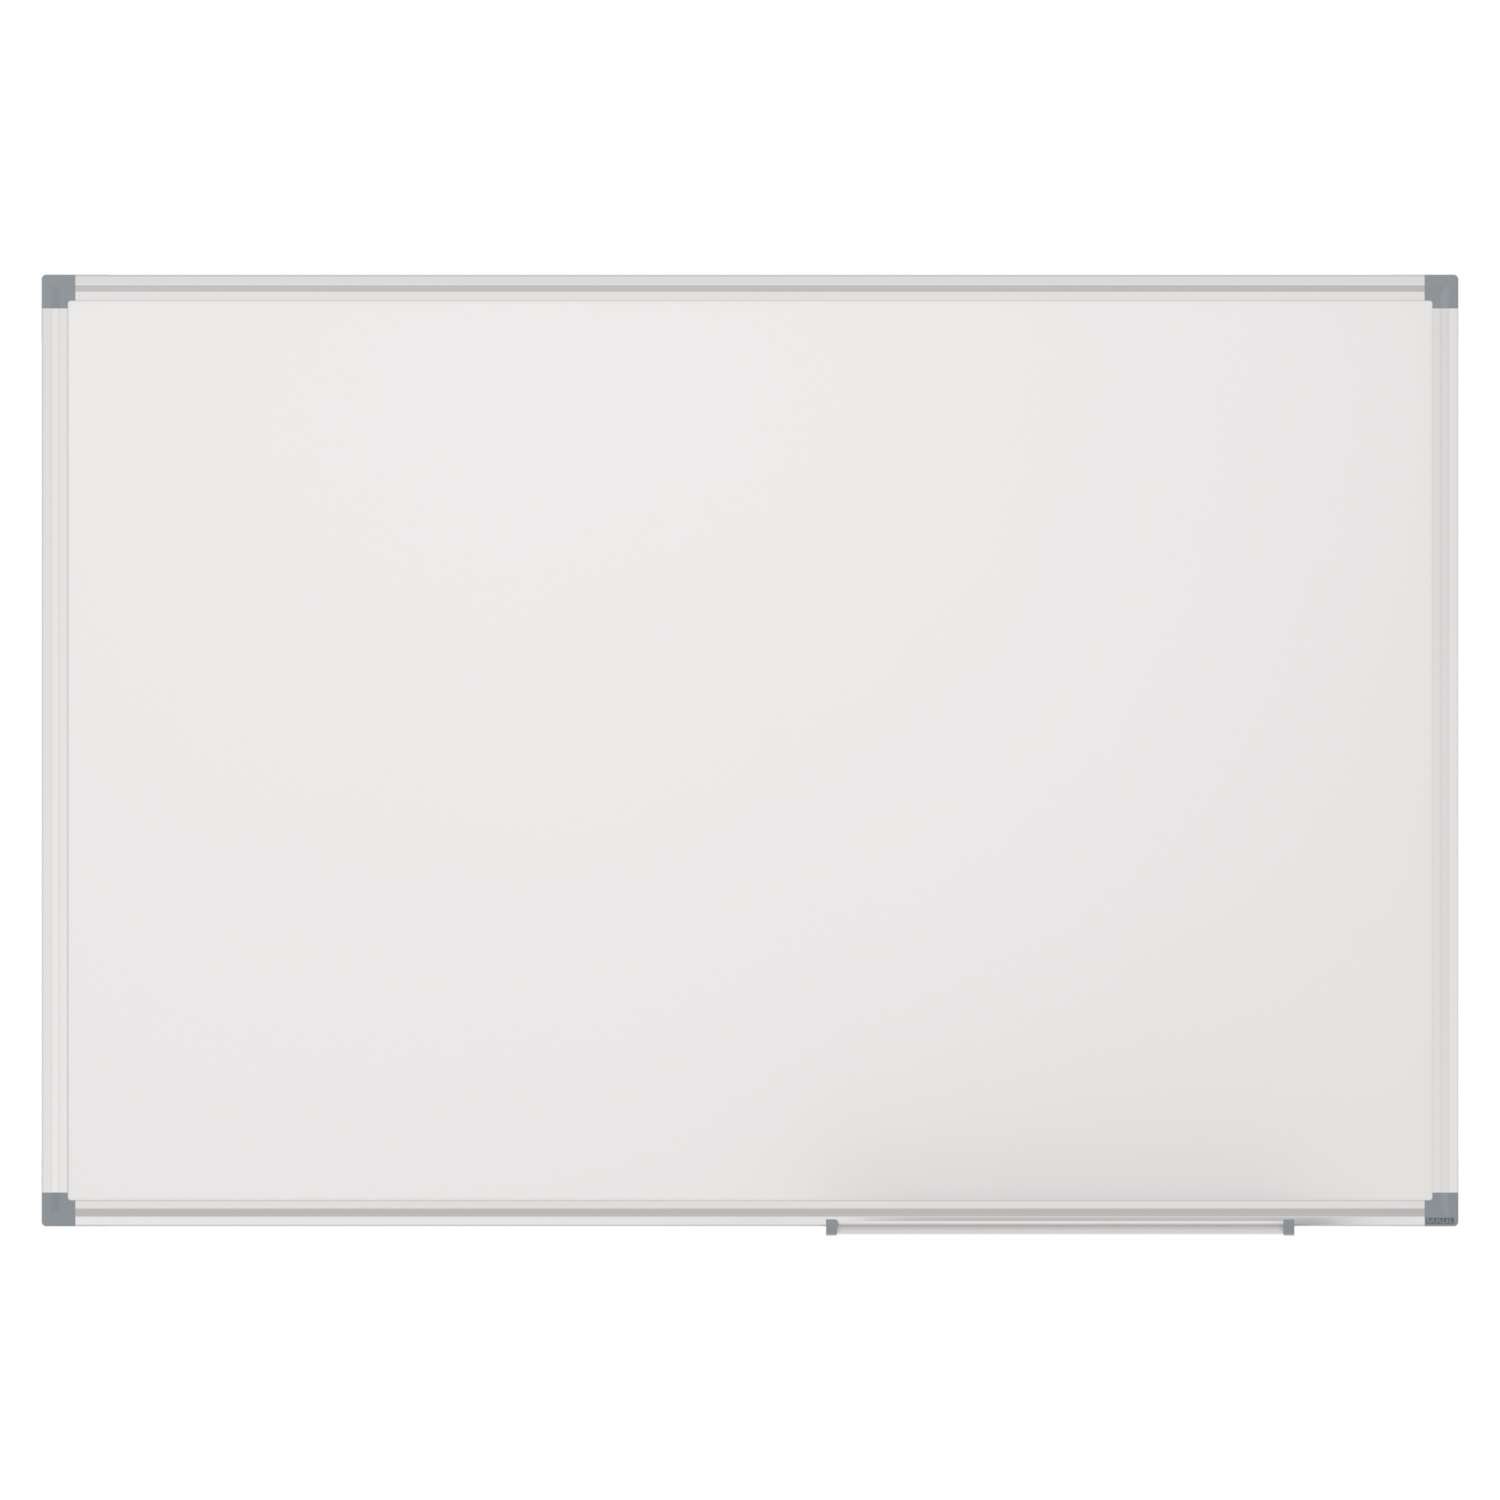 Whiteboard MAULstandard, 120x180 cm